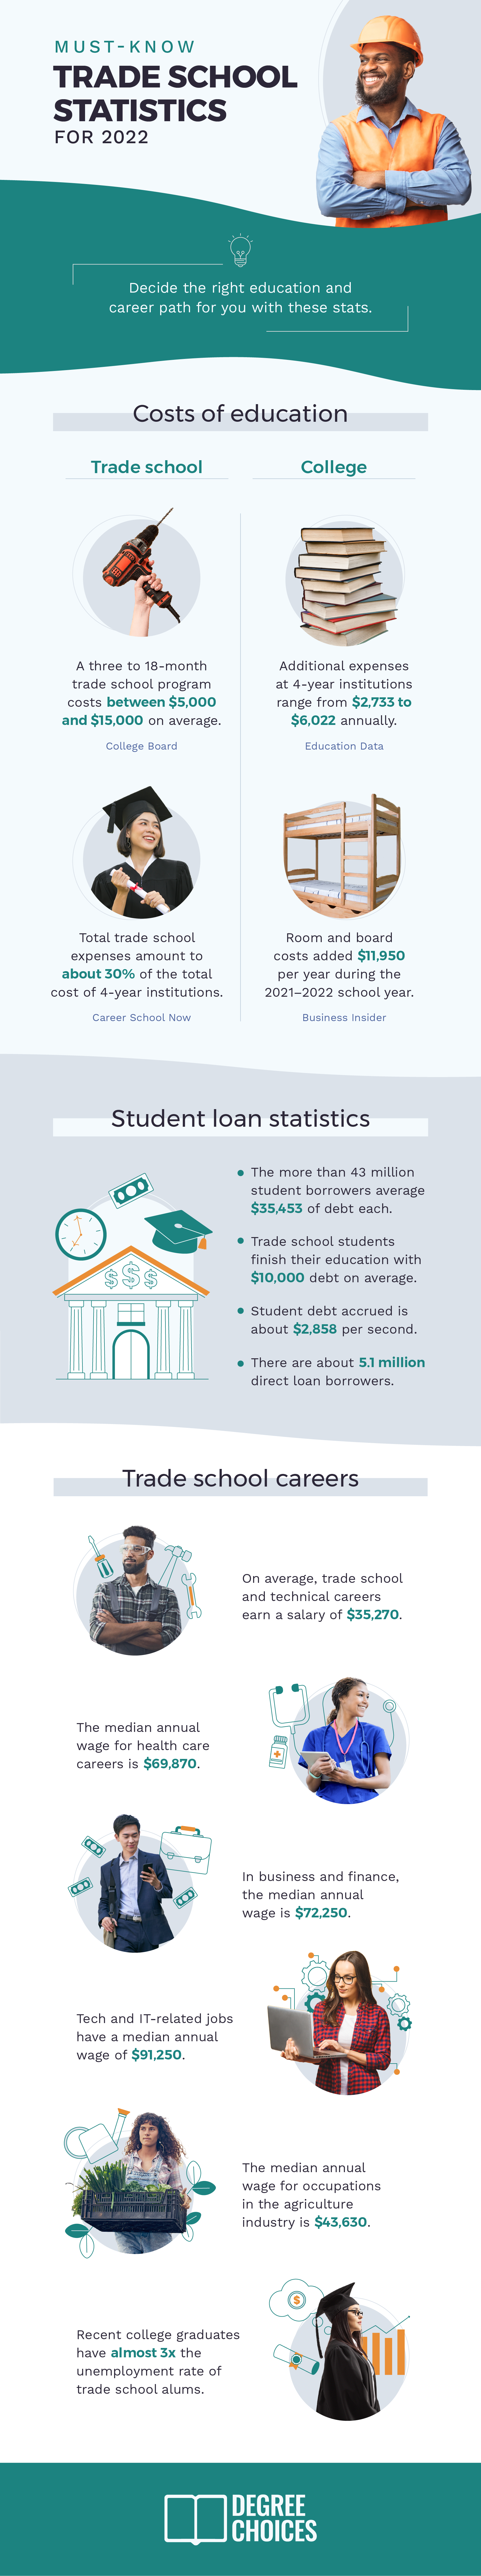 trade school statistics infographic